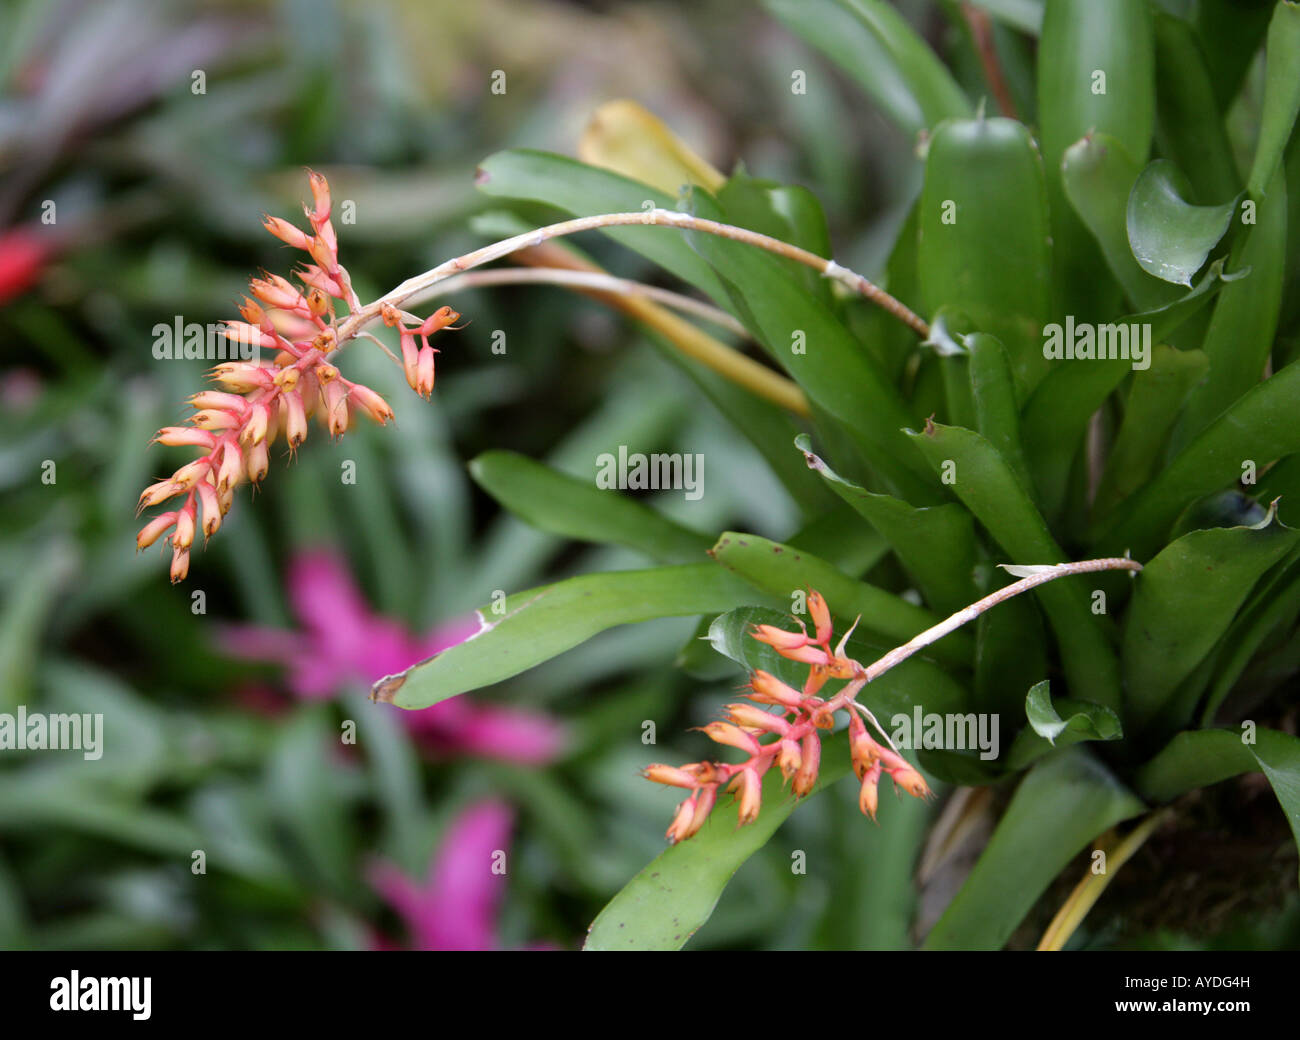 Aechmea winkleri, Bromeliaceae, bromeliad, Brazil, South America Stock Photo